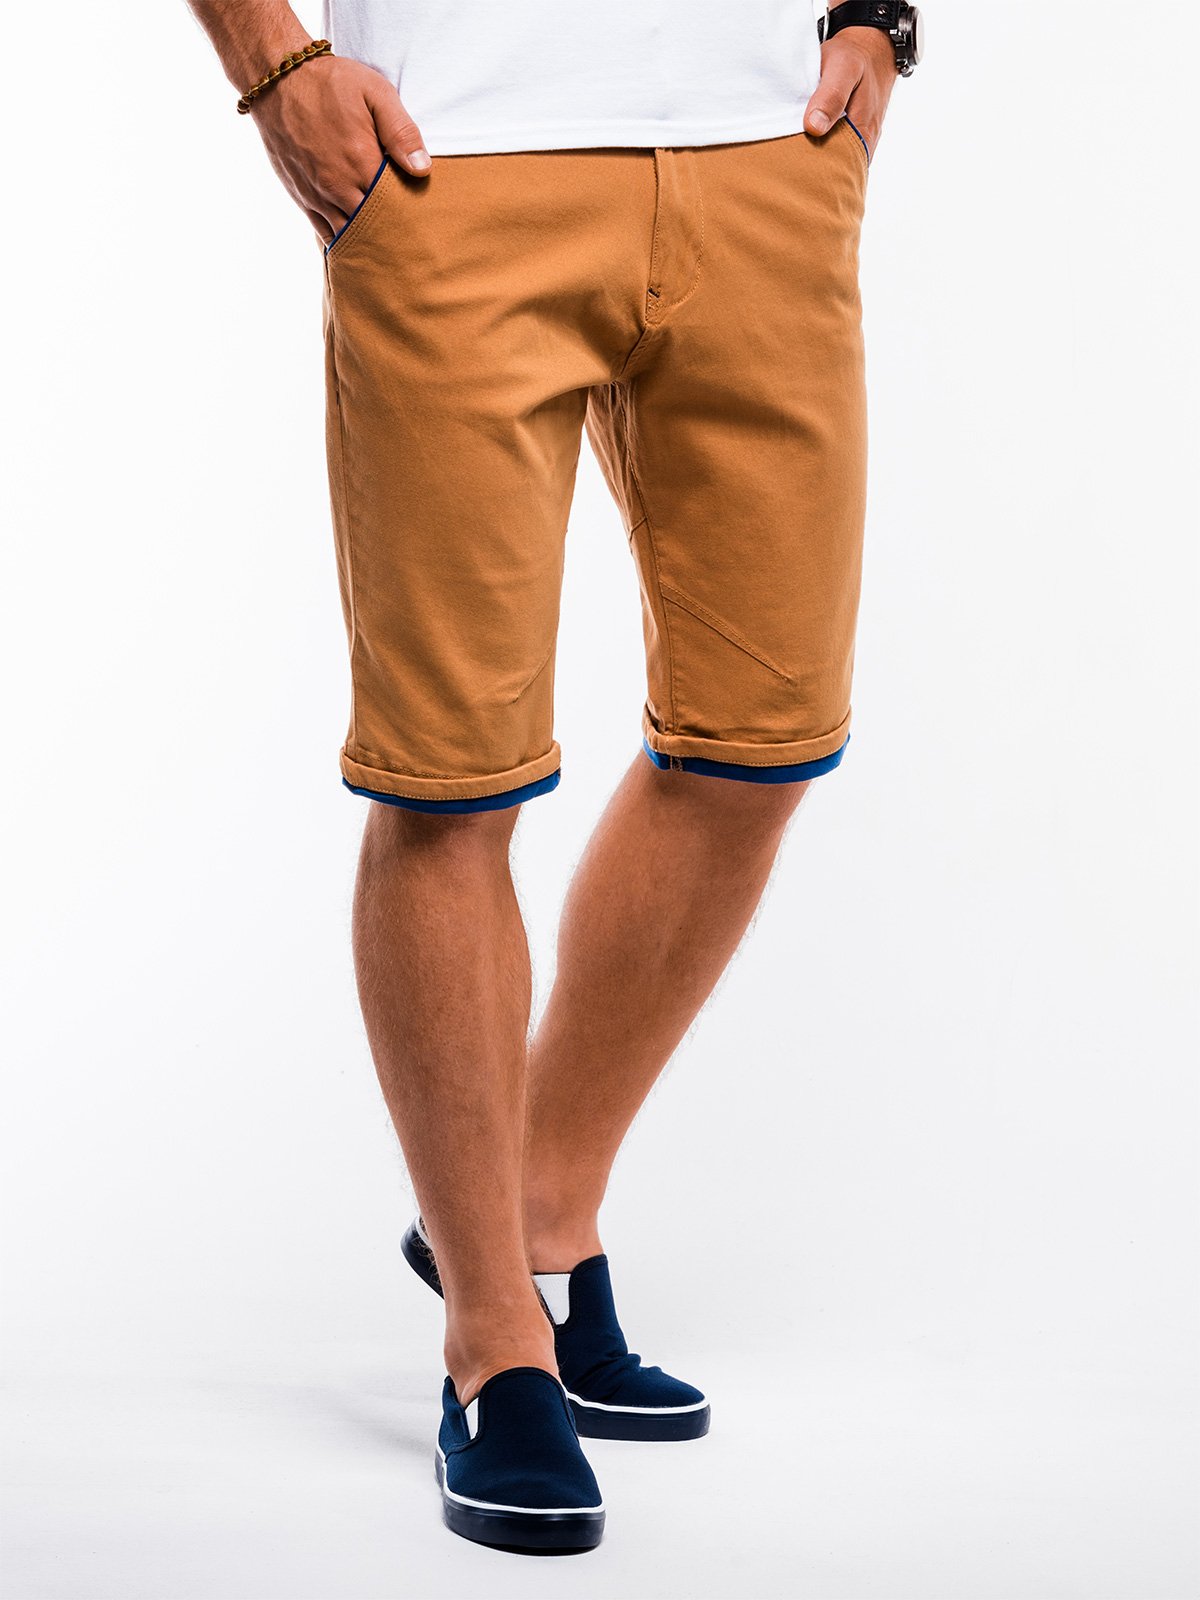 Betekenisvol Wat leuk ego Men's chino shorts - camel W150 | MODONE wholesale - Clothing For Men